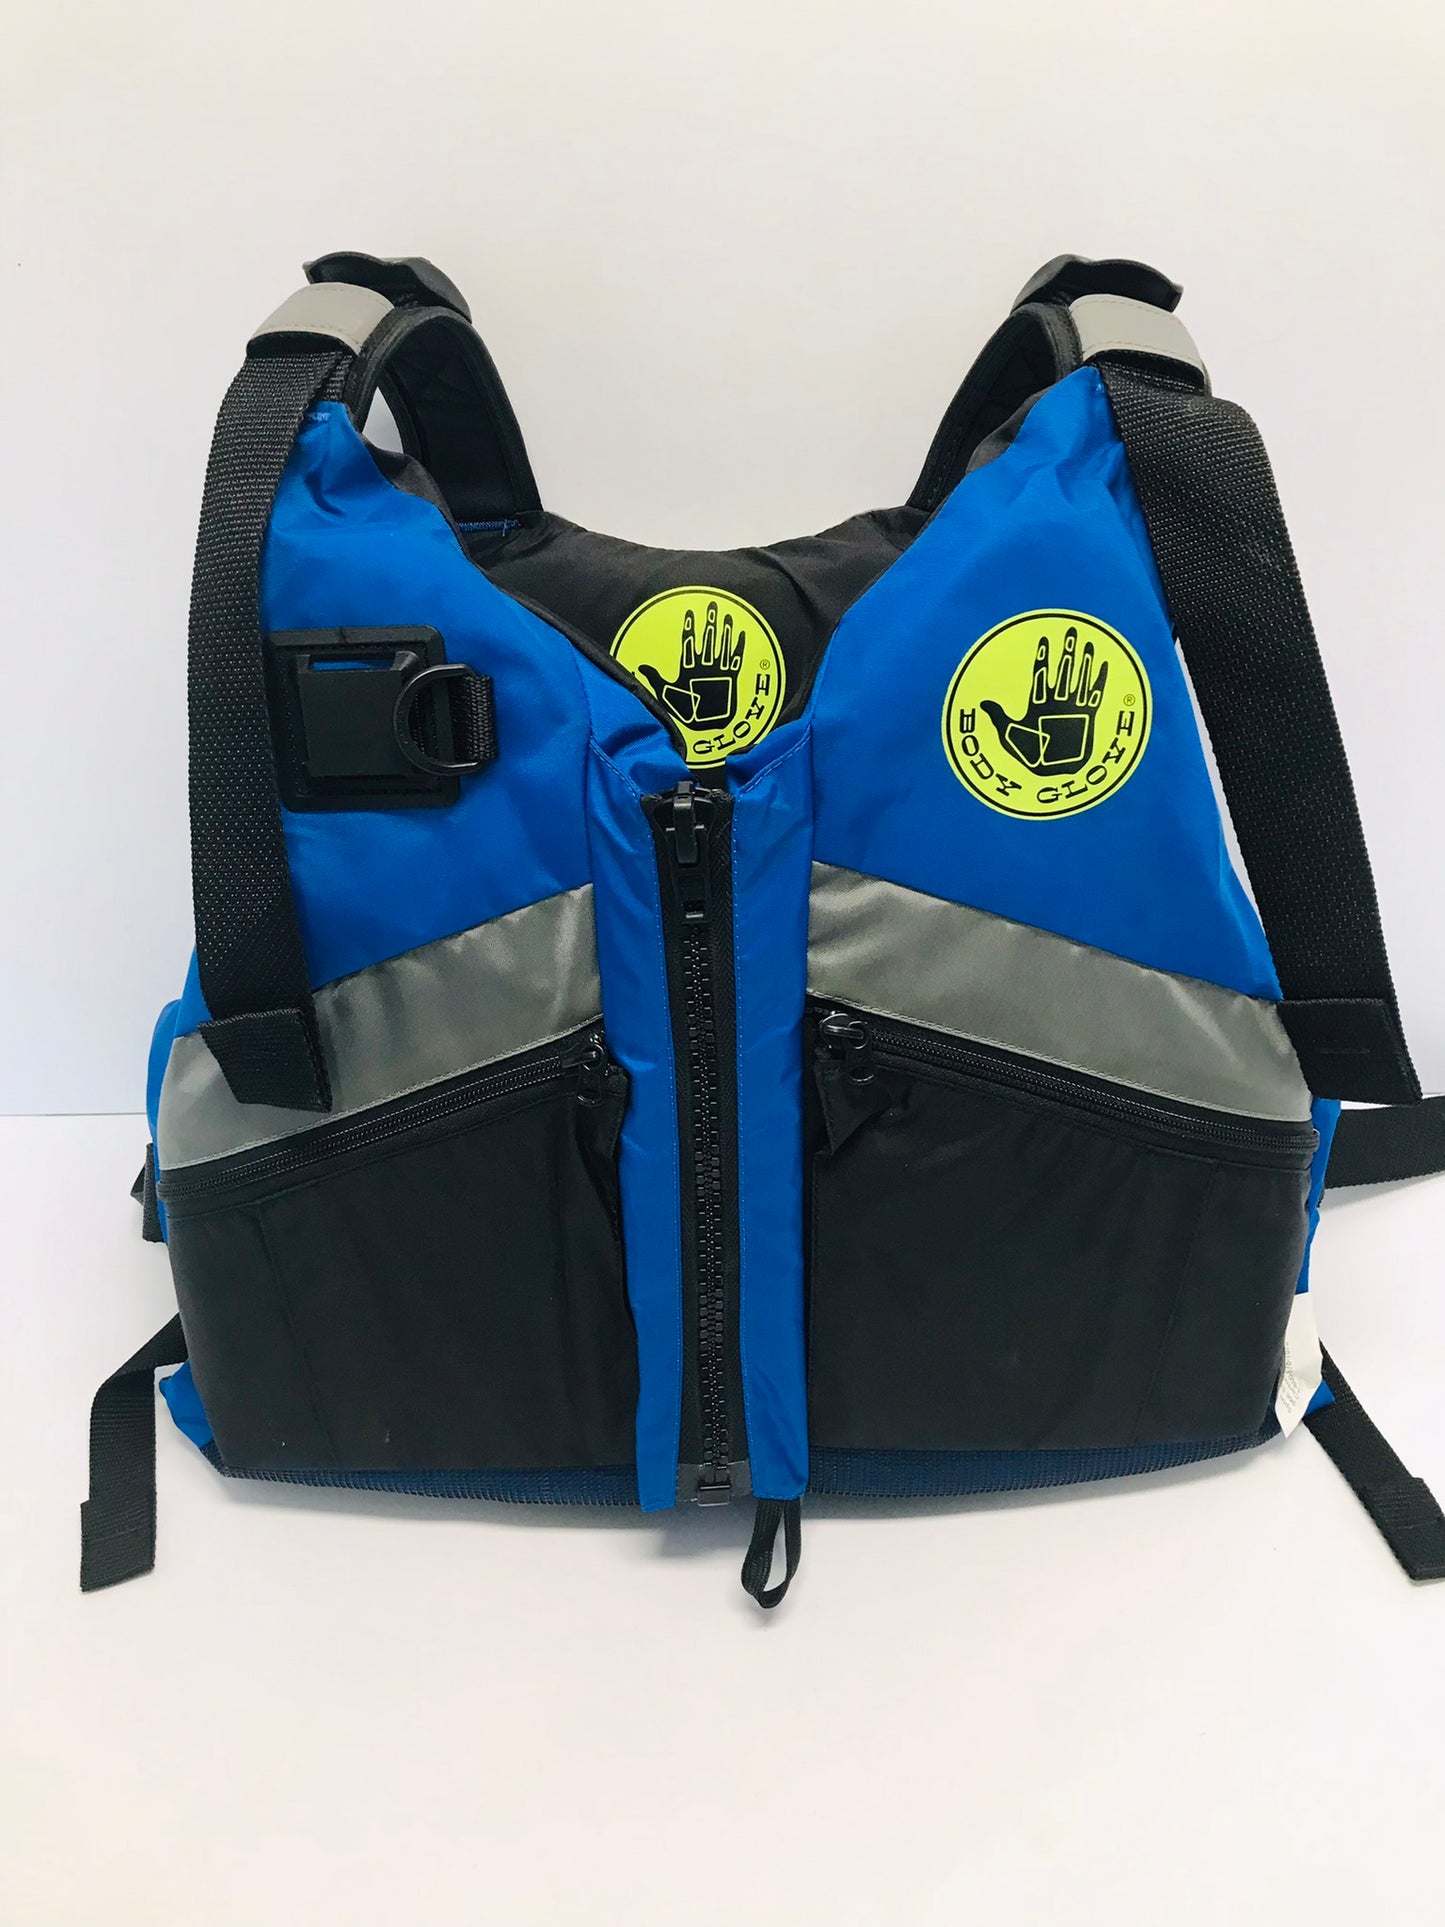 Life Jacket Adult Size small - Medium Body Glove Kayak Paddleboard Water Sports Vest Blue Black Lime New